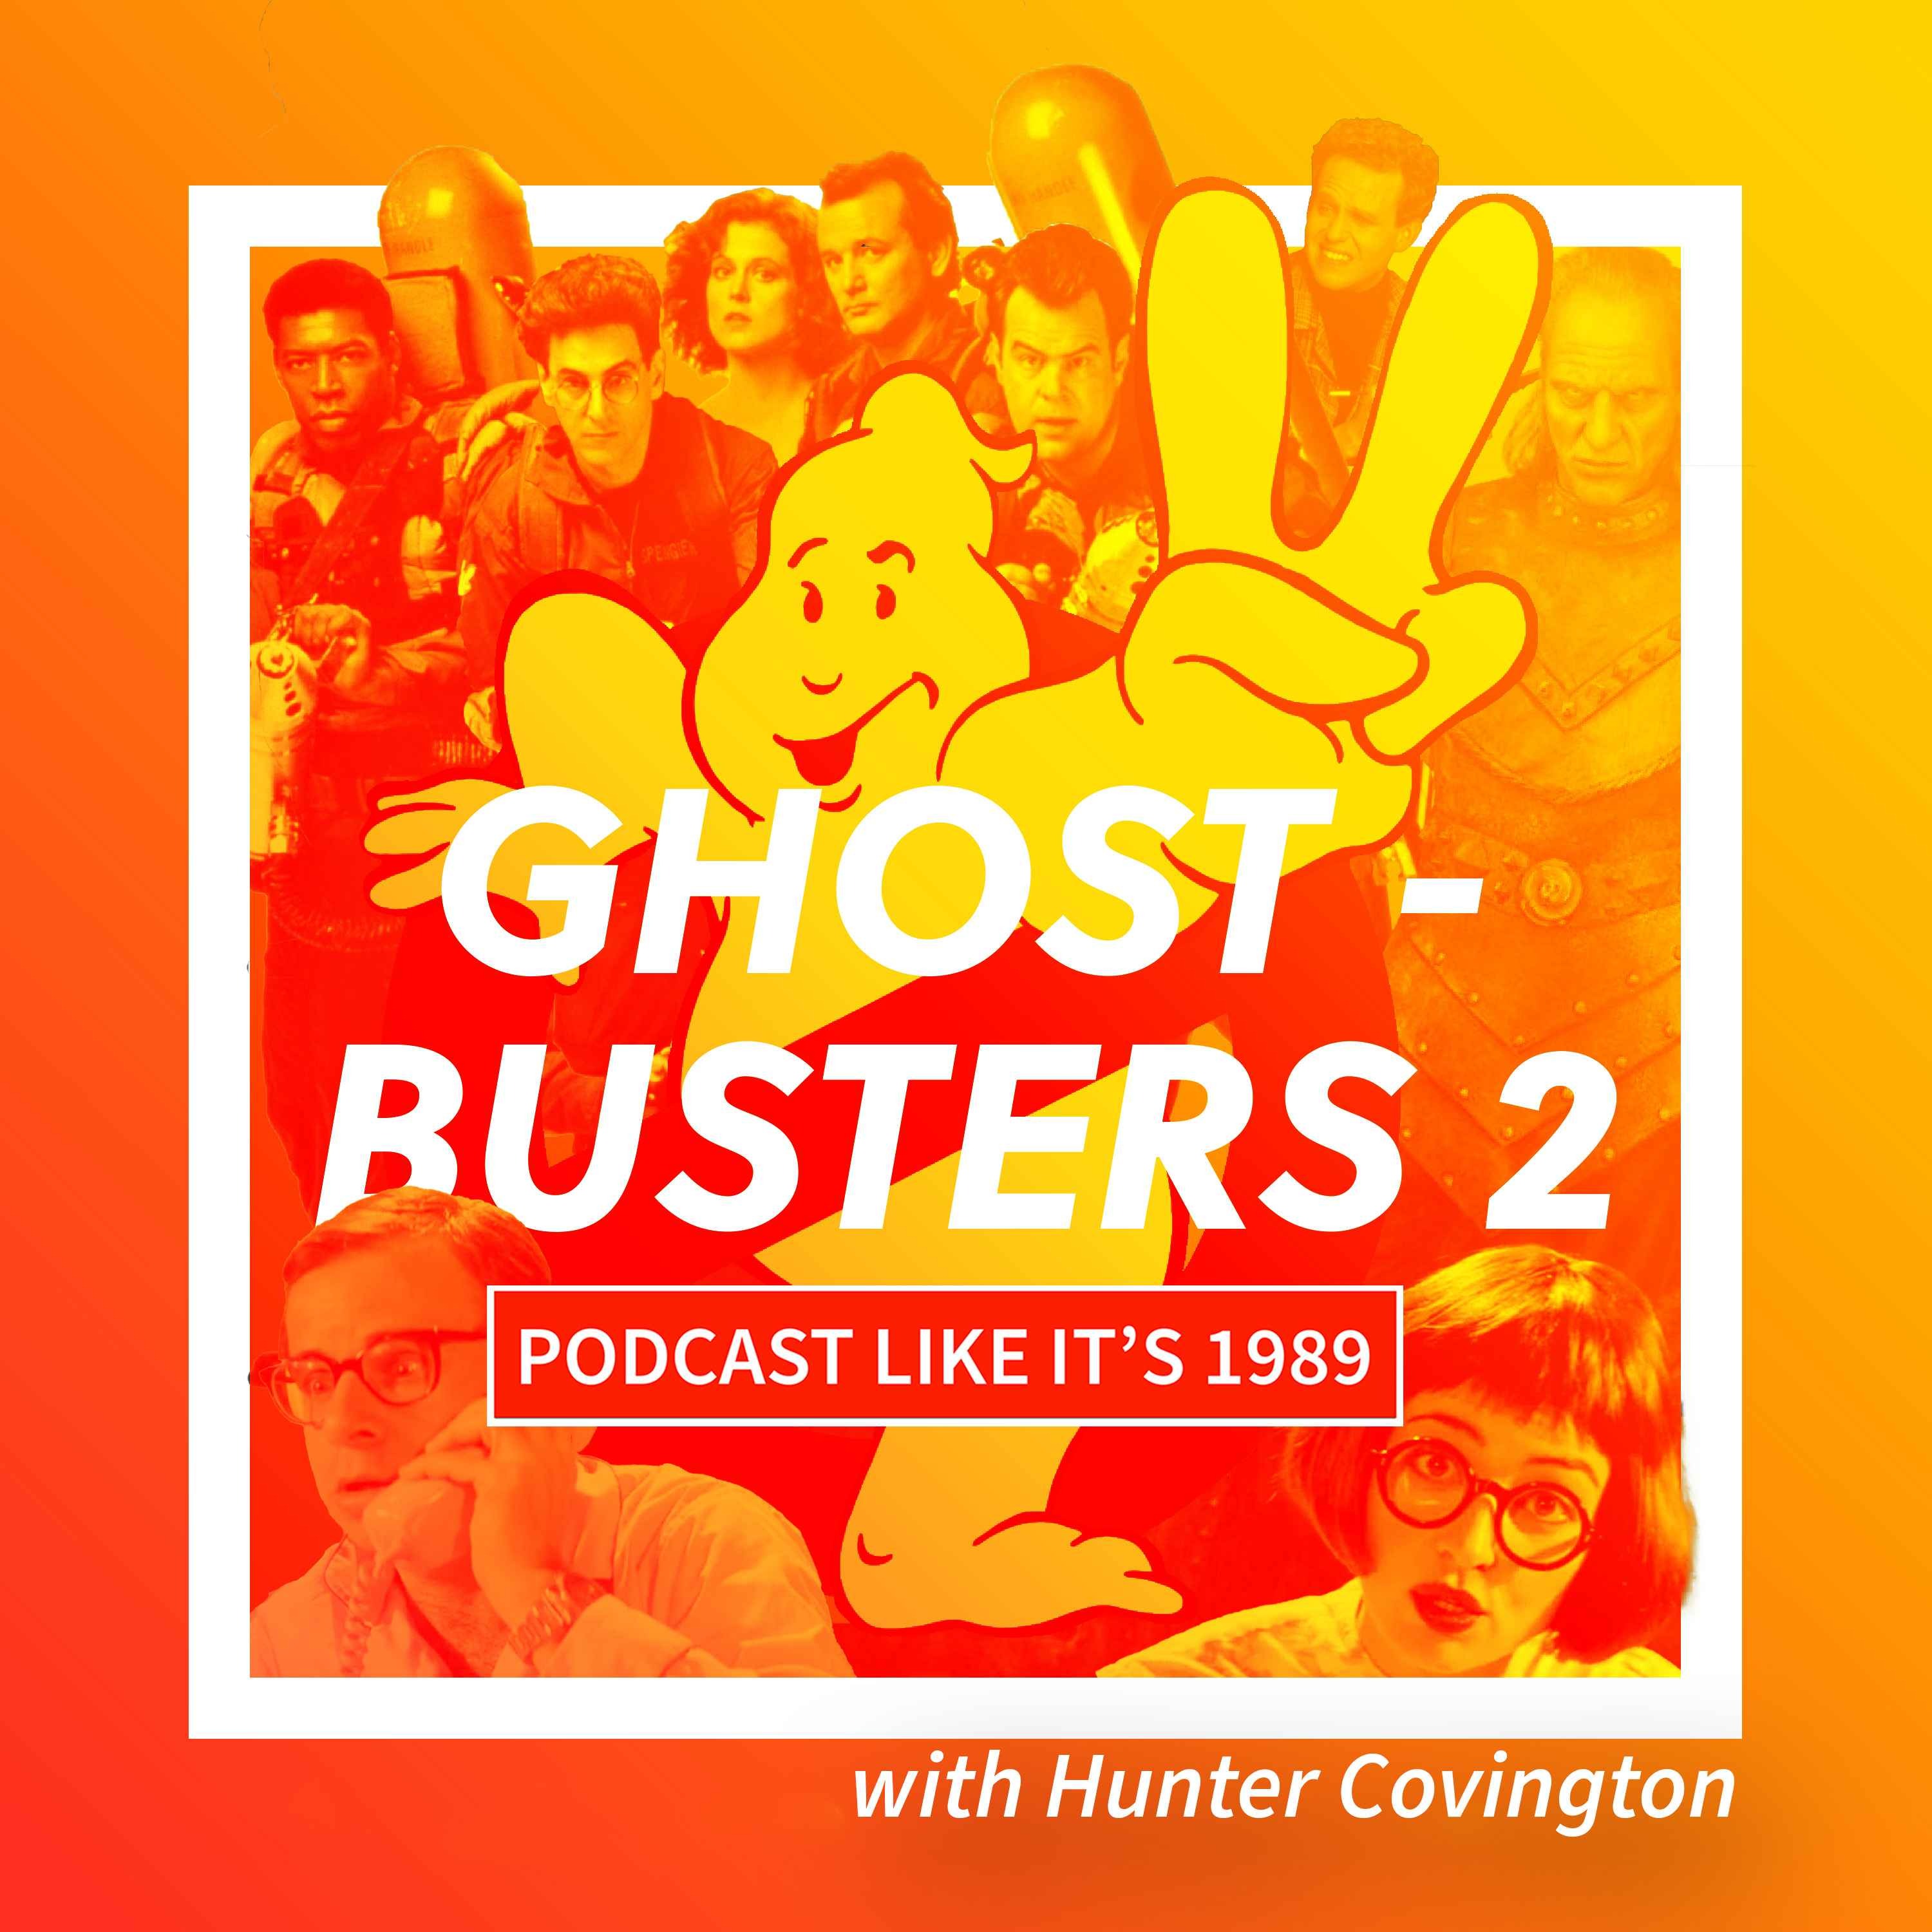 1989 Ghostbusters II with Hunter Covington